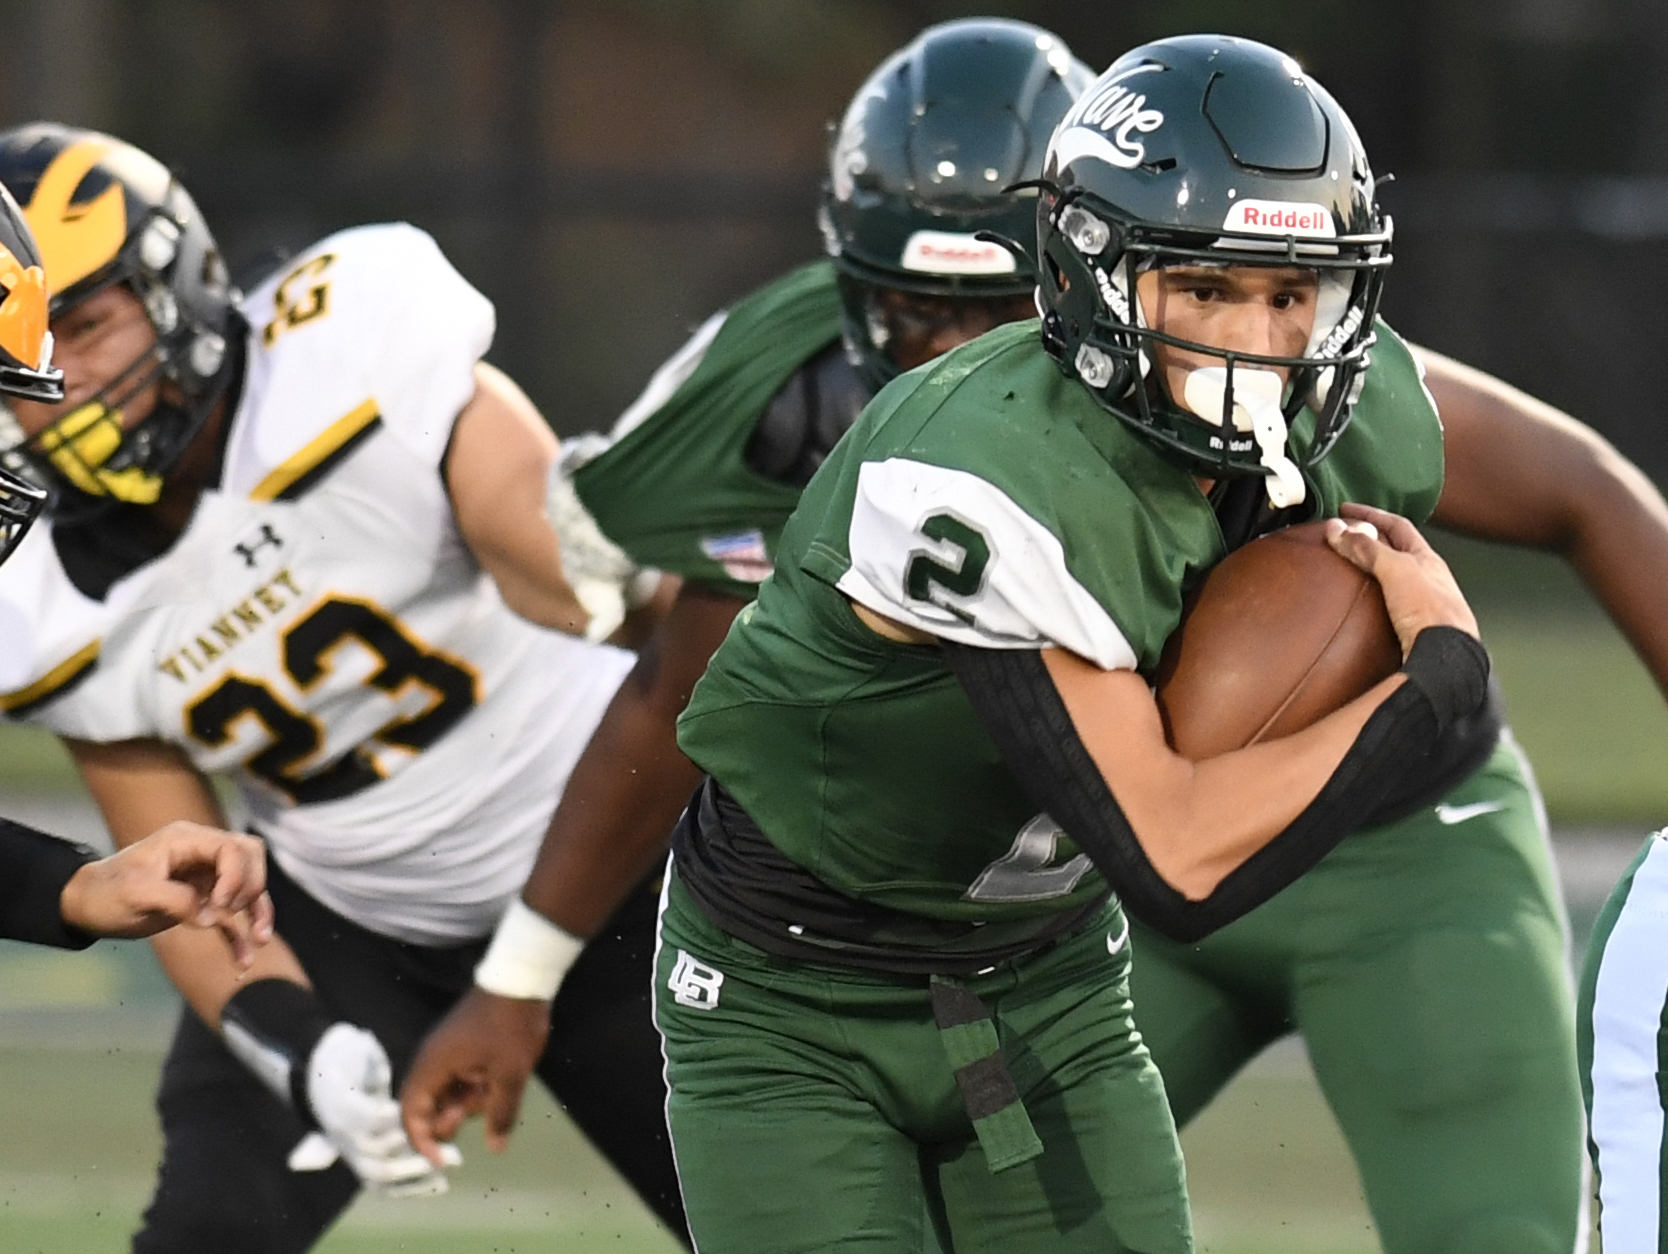 Long Branch High School Football – The Link News